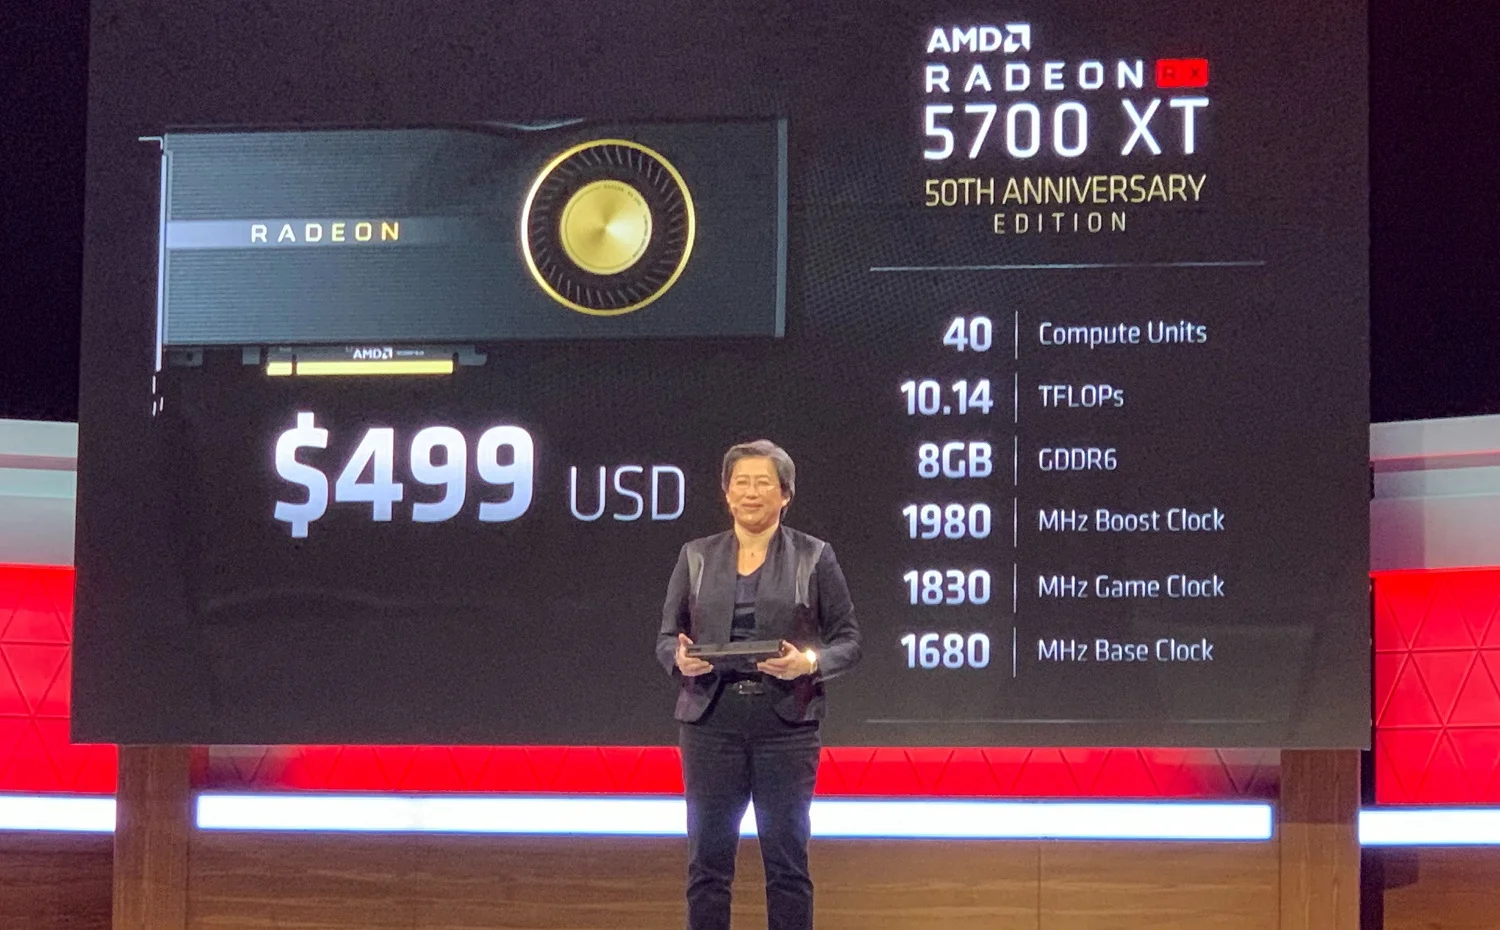 Представили AMD Radeon RX 5700 XT 50th Anniversary Edition: красивая, золотистая и разогнанная - фото 1